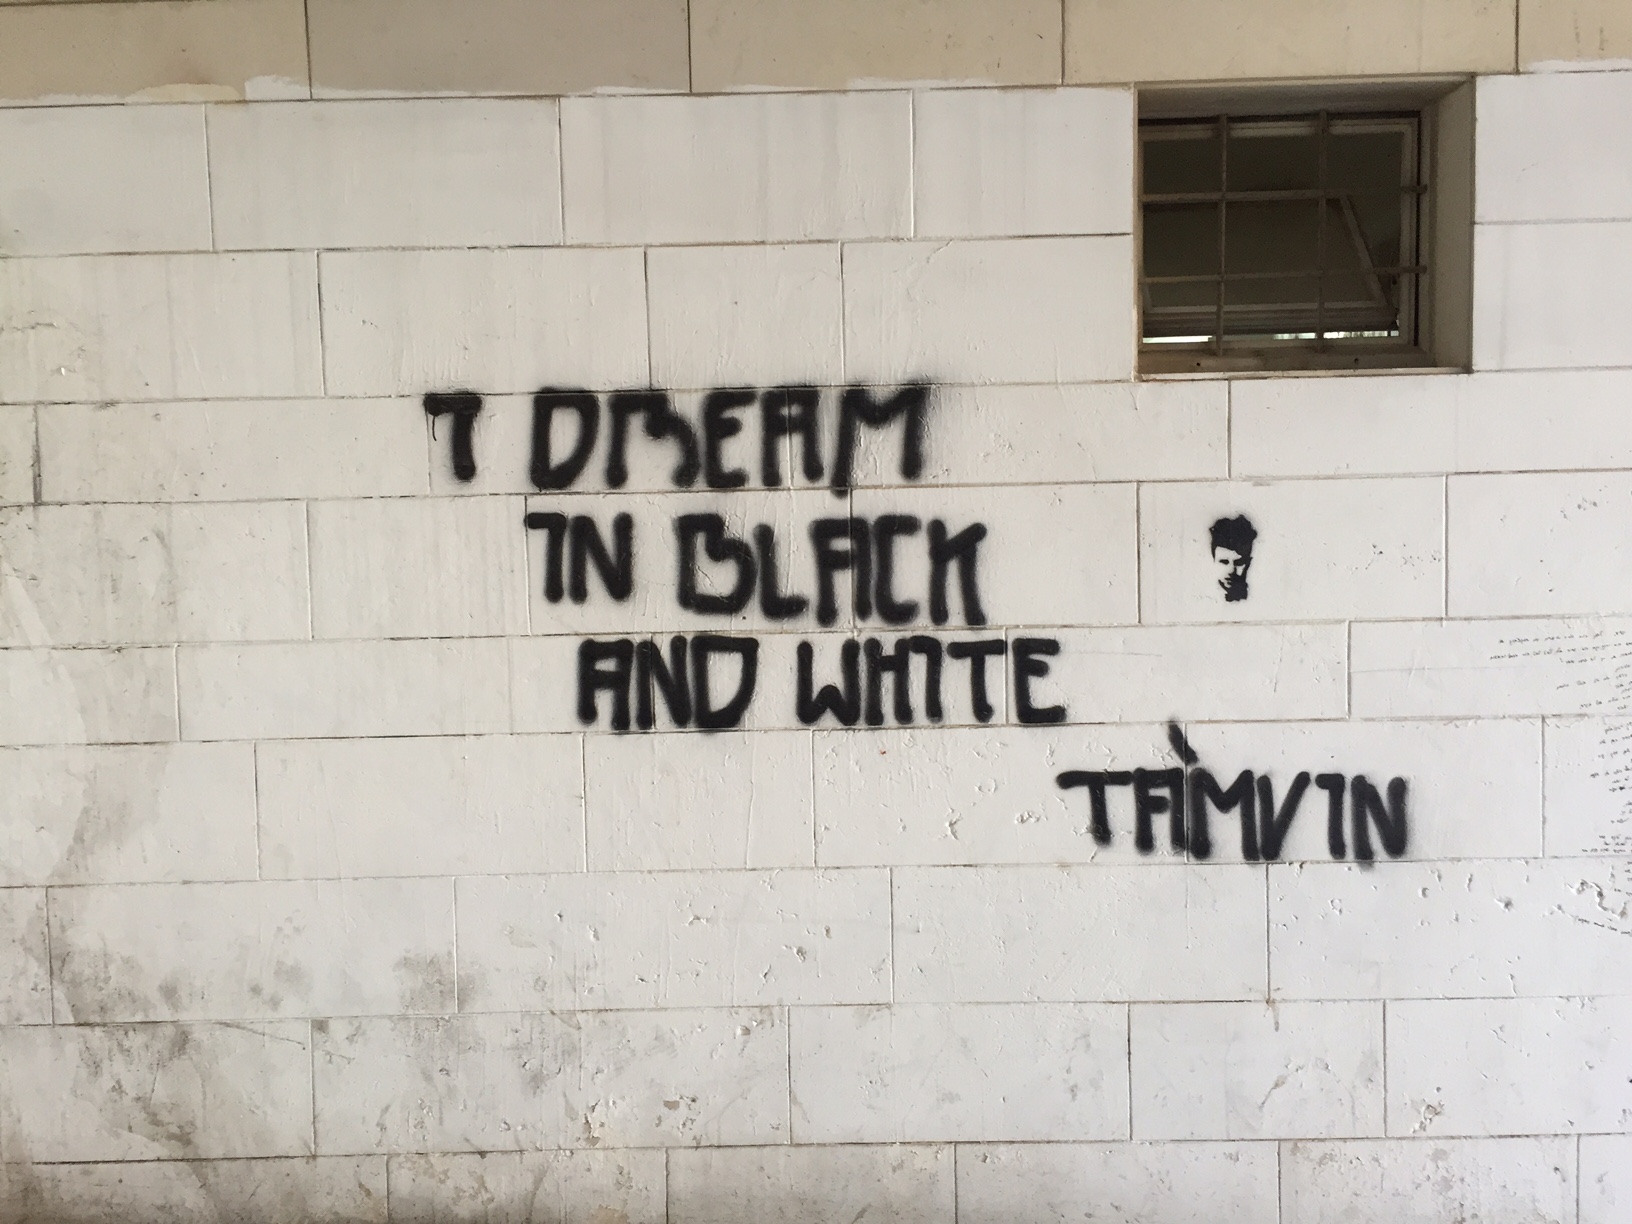 "I Dream in Black and White", Jerusalem 2016